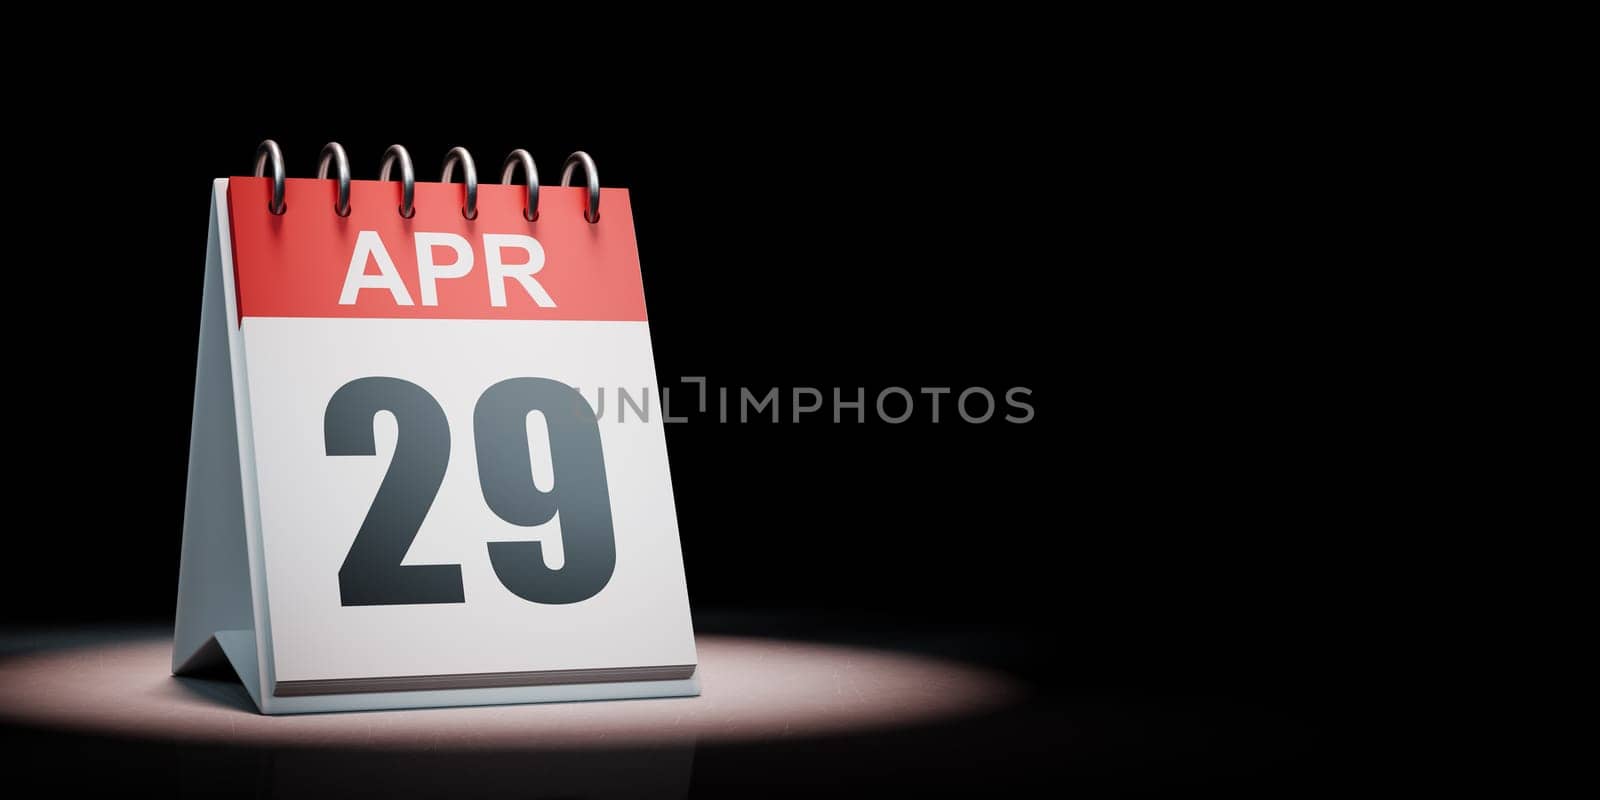 April 29 Calendar Spotlighted on Black Background by make